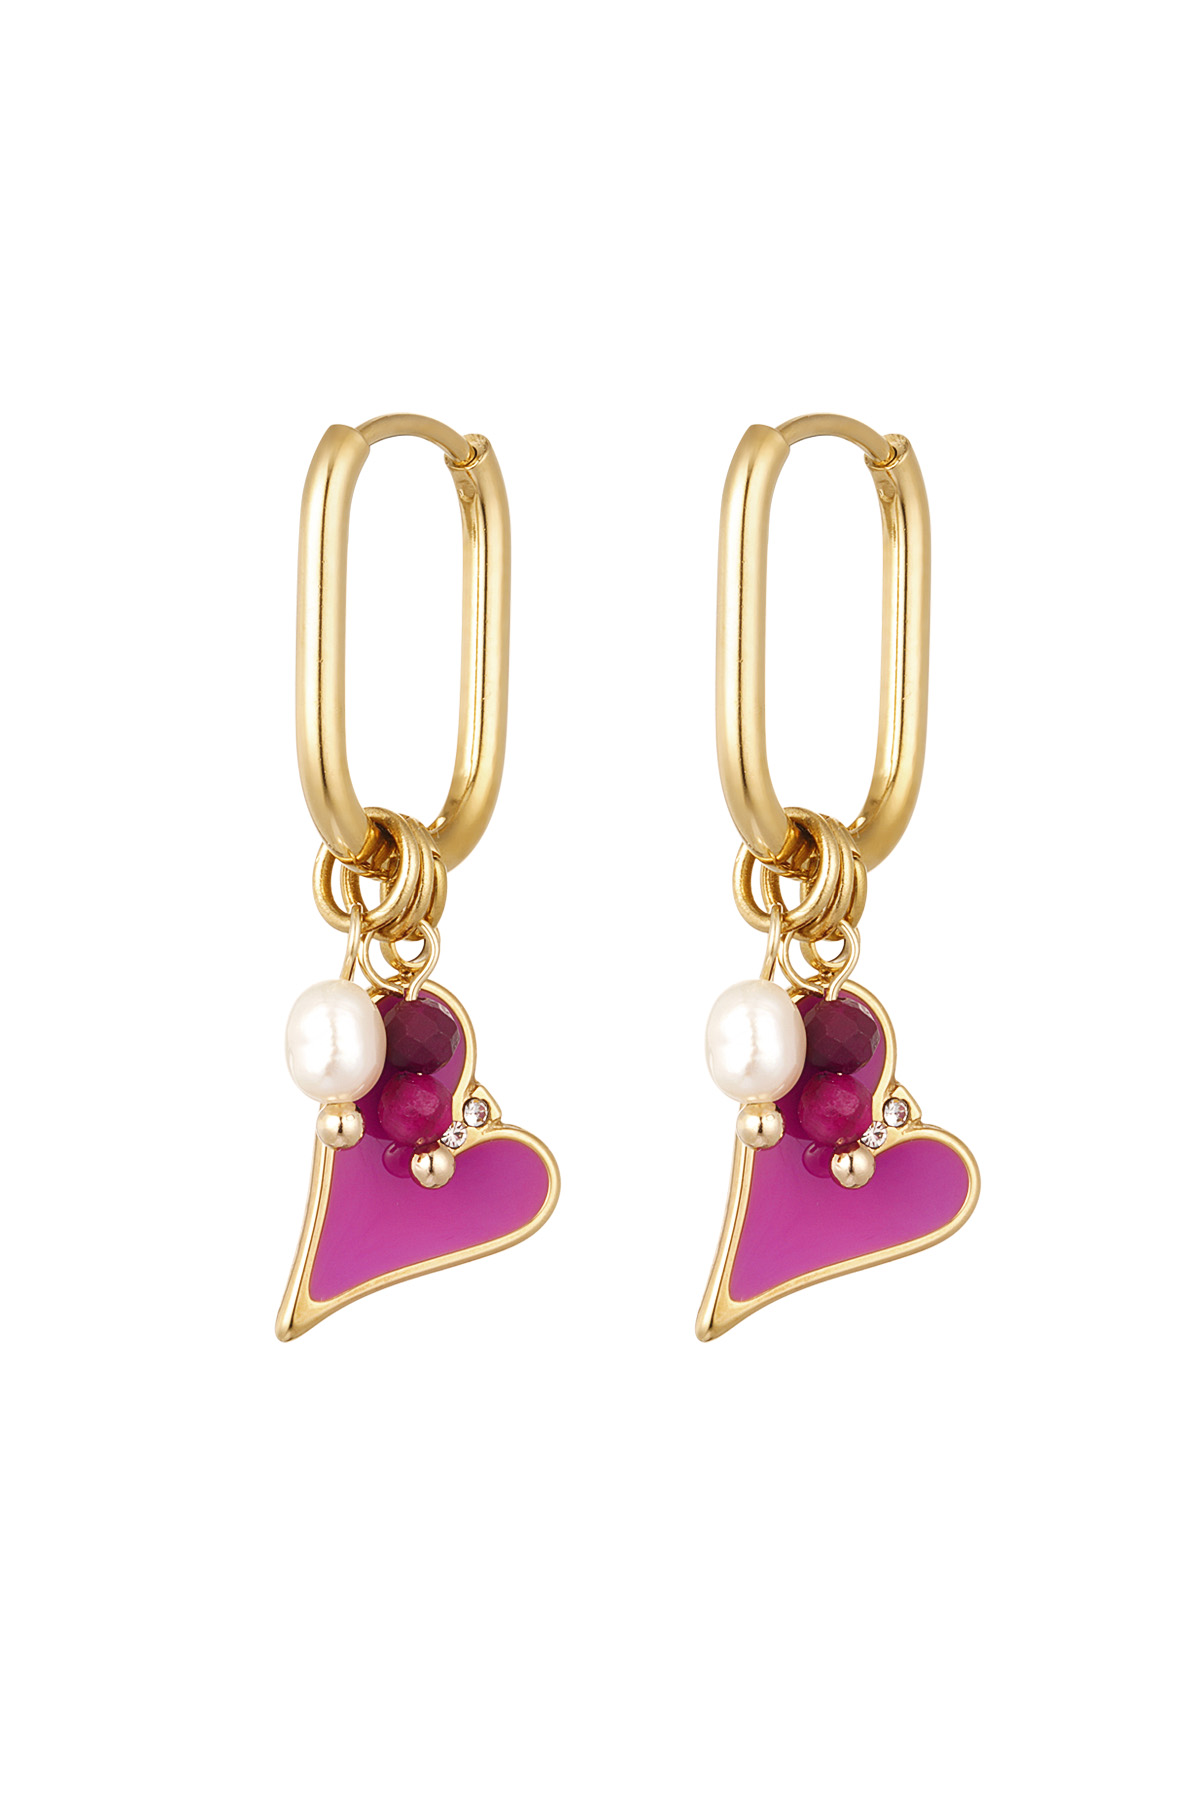 Ohrringe farbiges Herz mit Perle - Gold/Rosa 